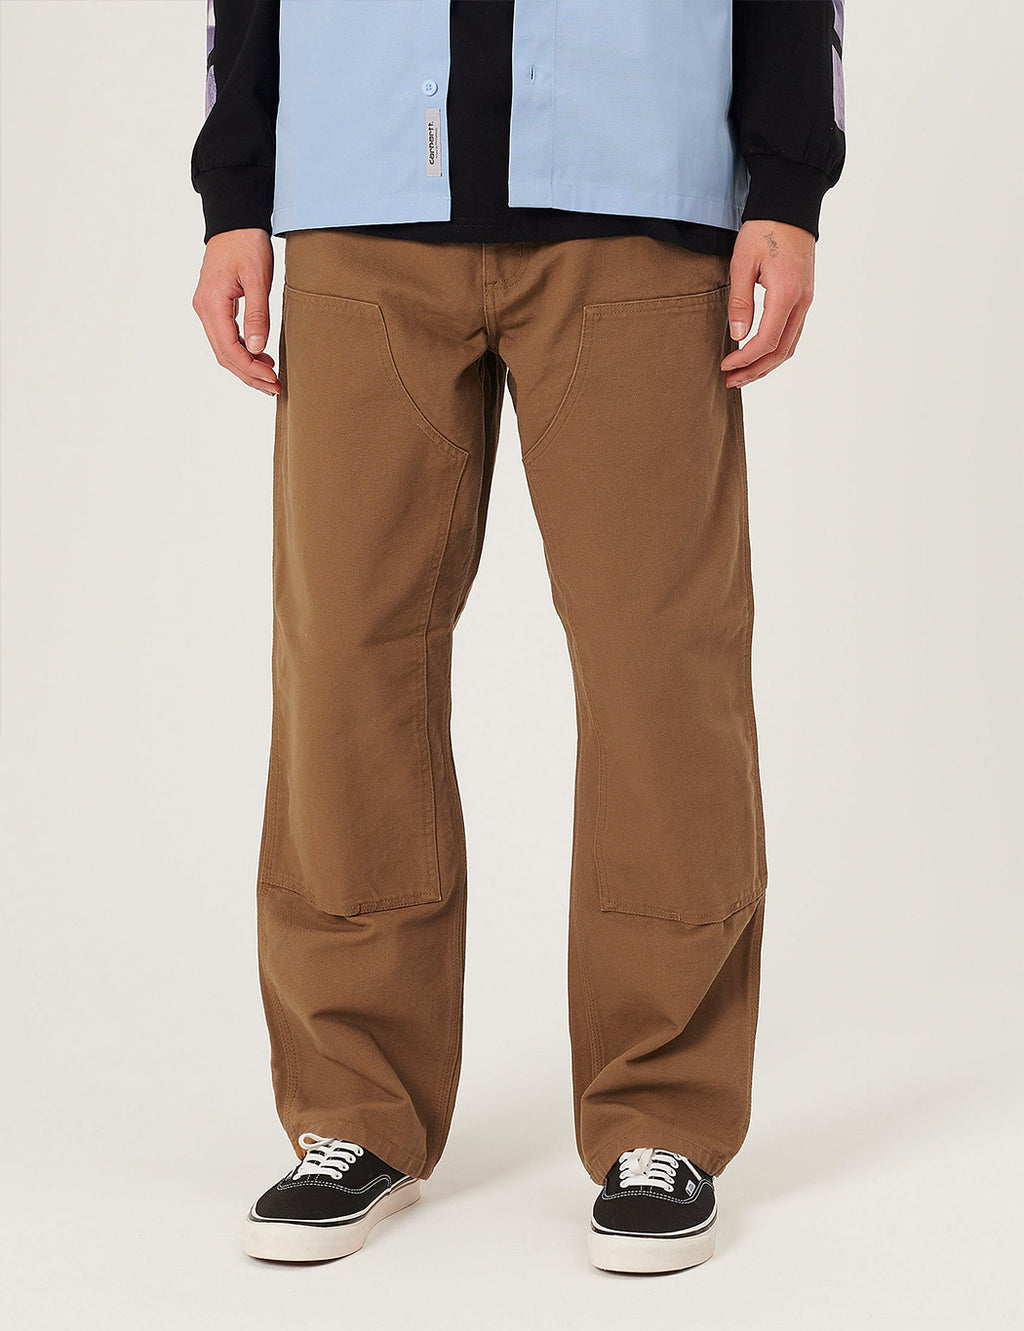 Carhartt Fleece Lined Double Knee Pants Size 30x32 – Recalled Shop